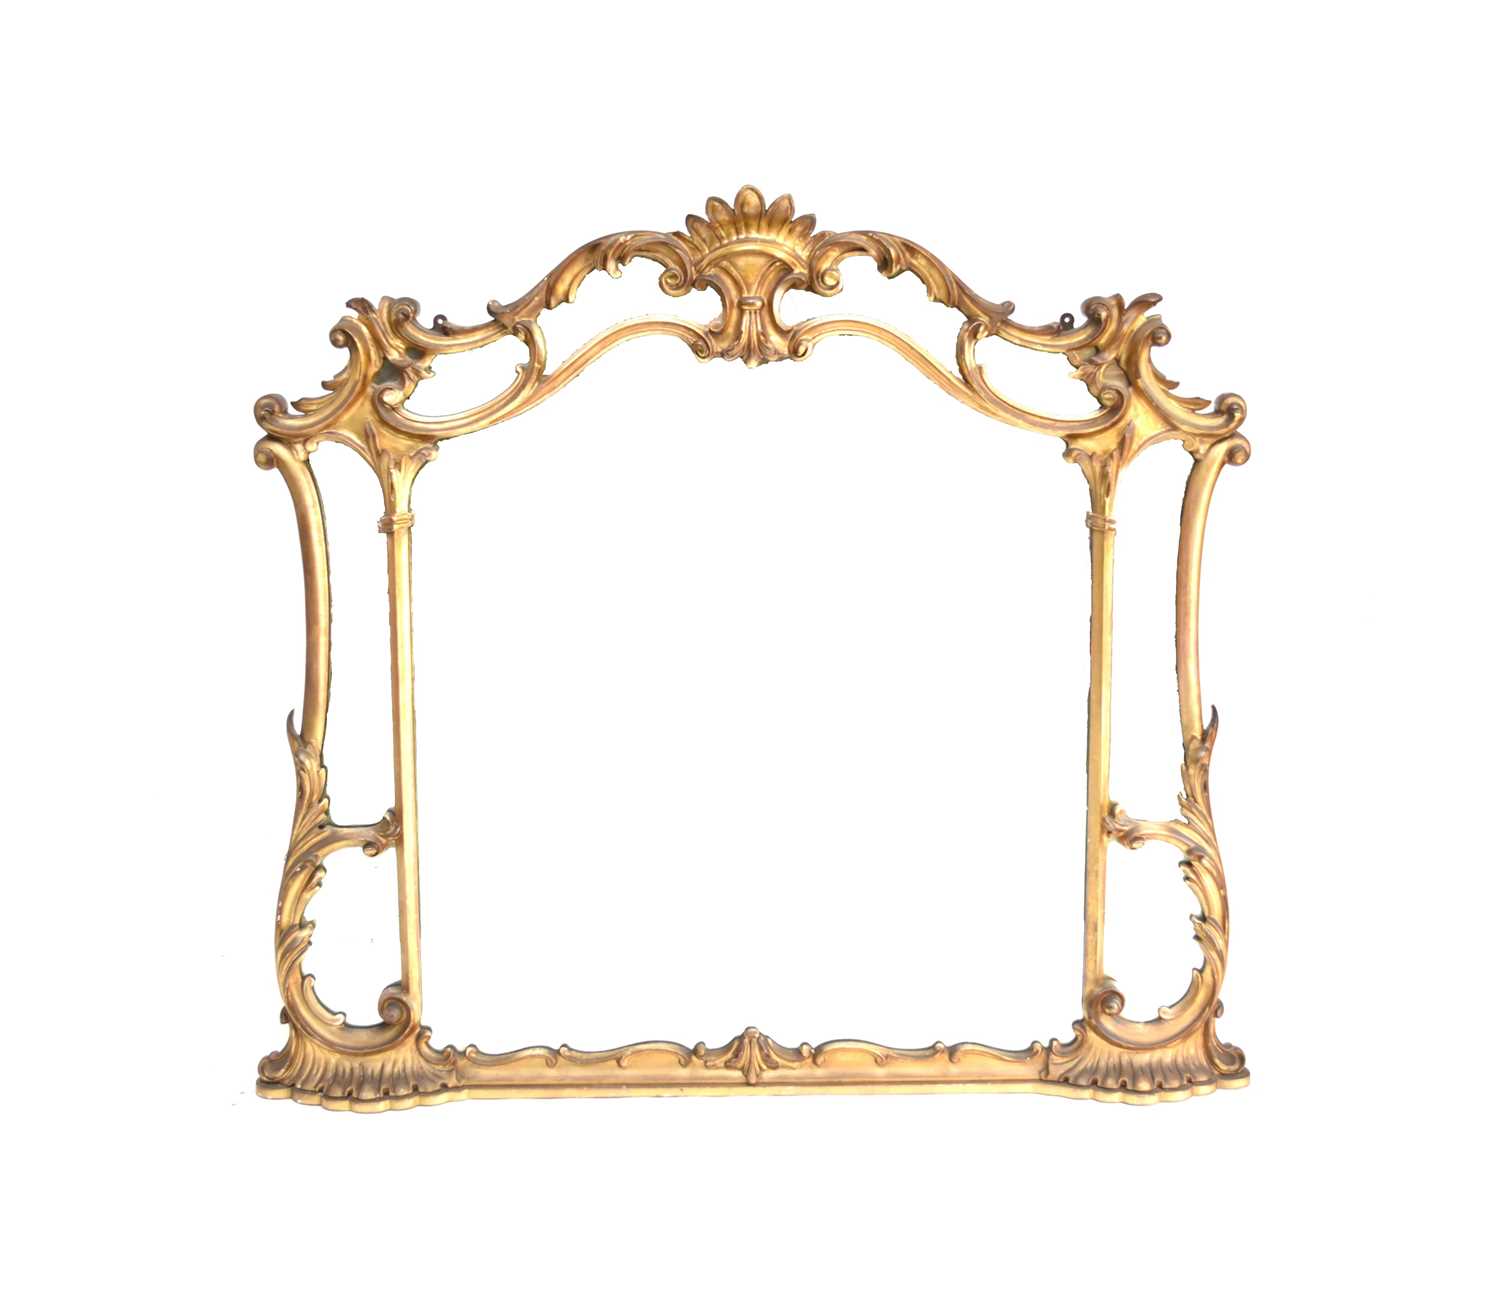 A 19th century rococo revival giltwood overmantel mirror